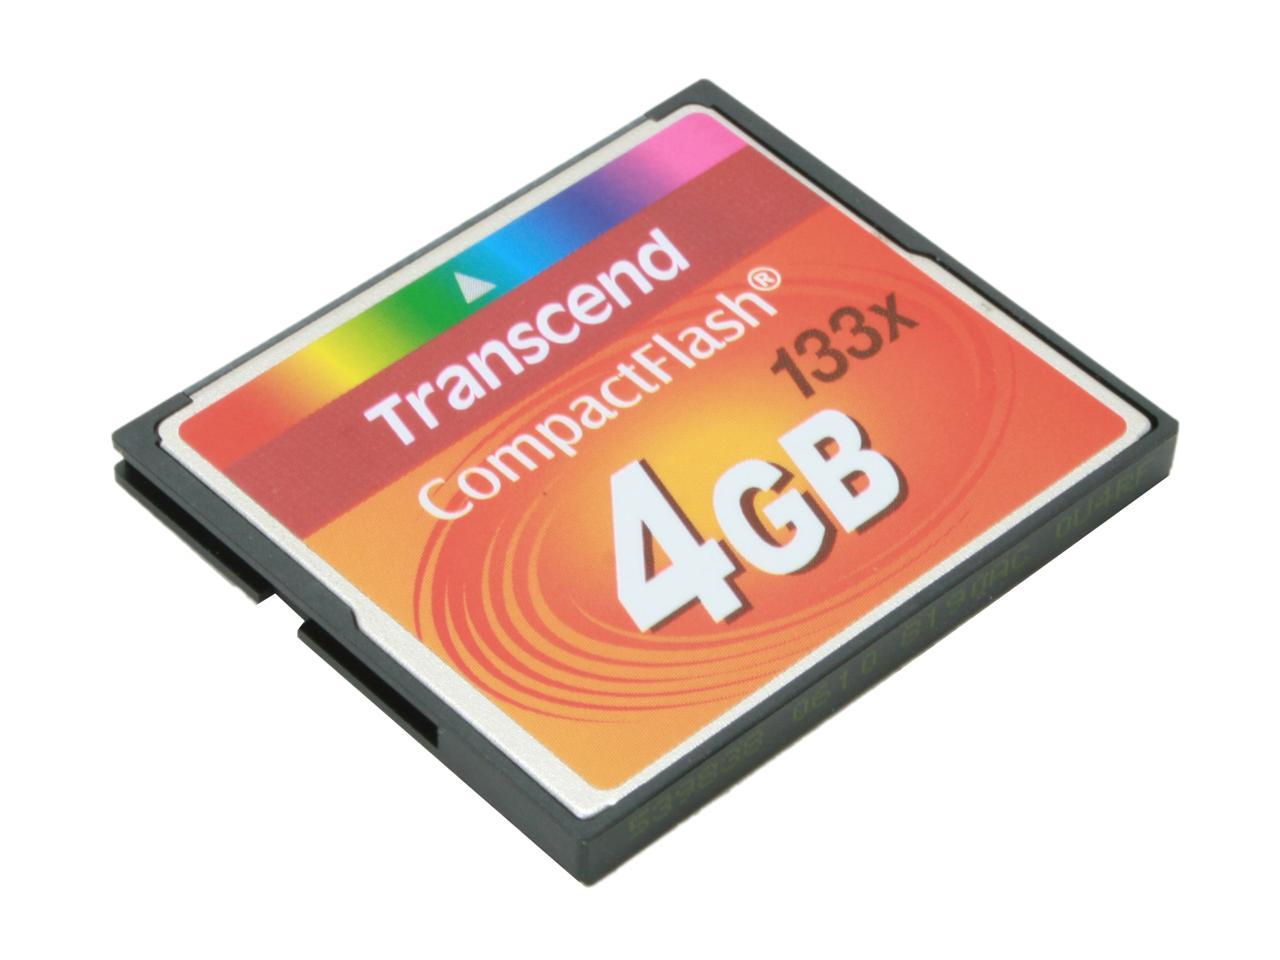 Transcend Compact Flash 133x. Карта памяти RIDATA Compact Flash Pro 512mb 52x. Карта памяти RIDATA Compact Flash 150x 2gb. Карта памяти RIDATA Compact Flash Pro 256mb 52x. Cf flash